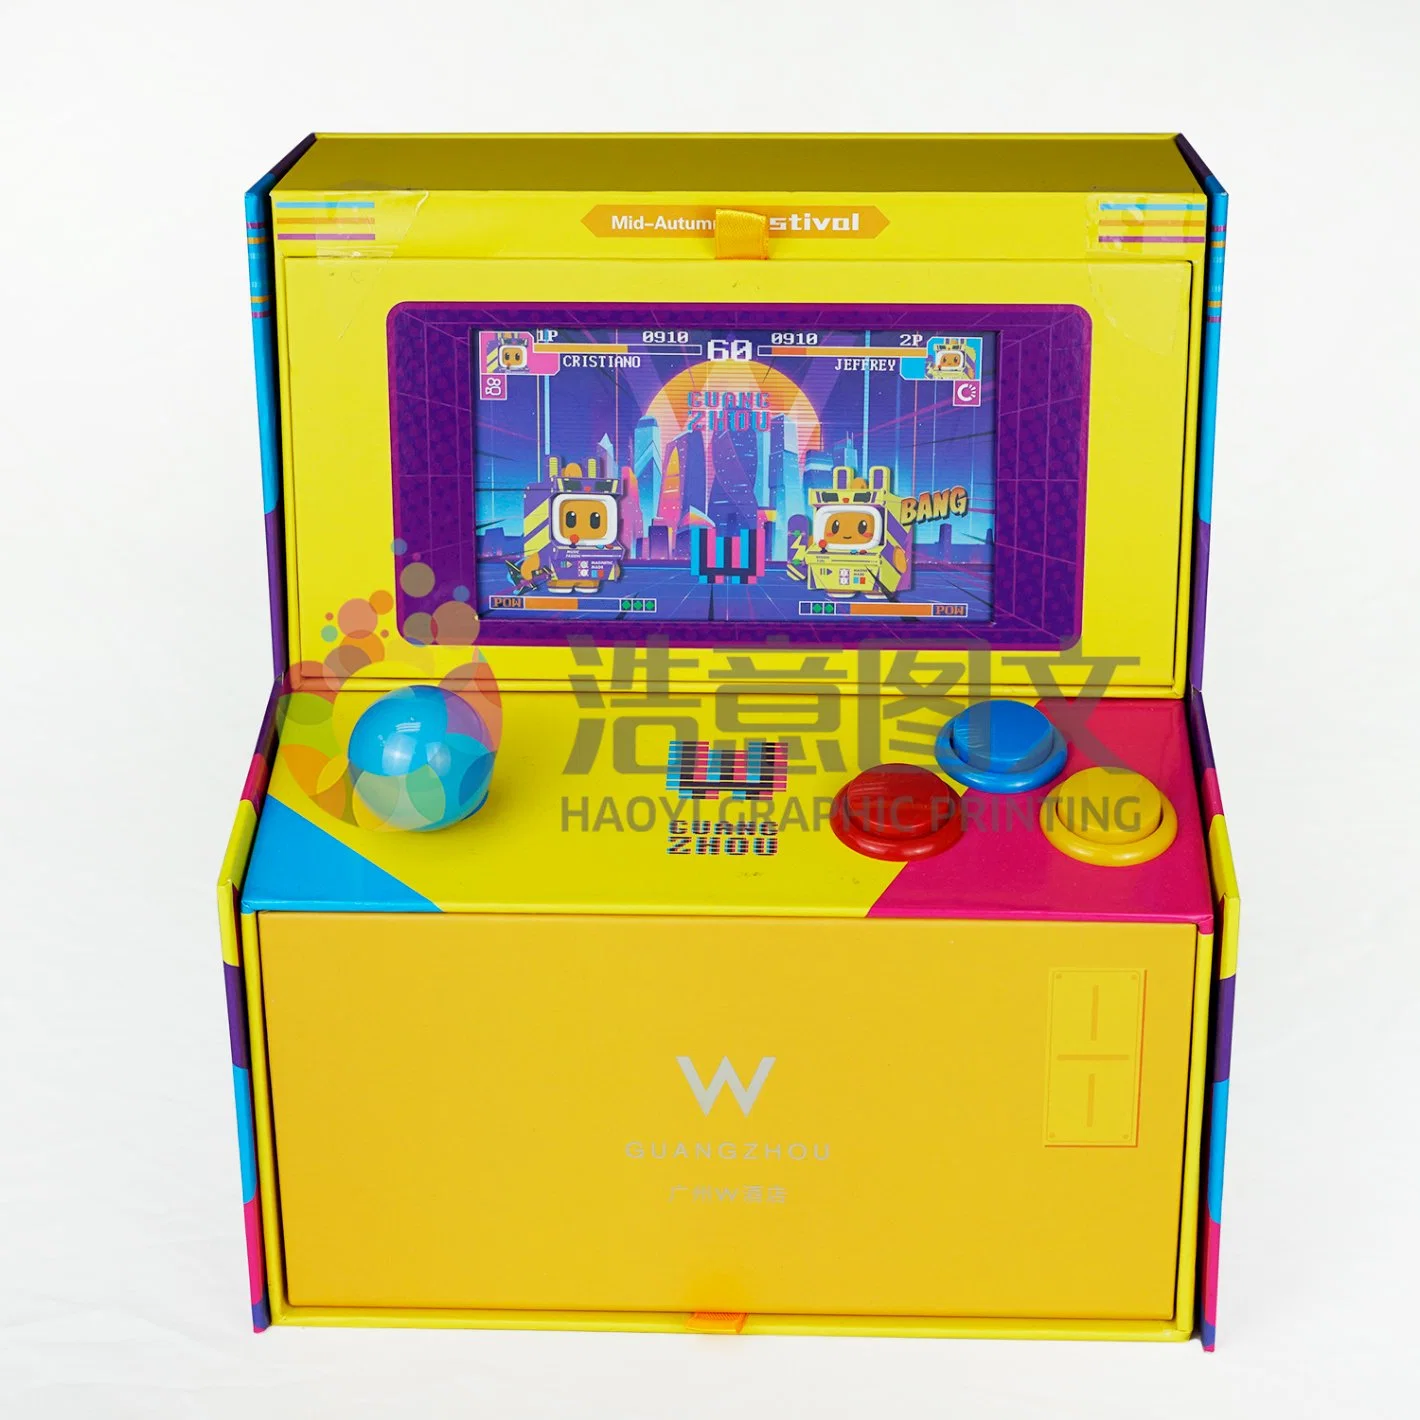 Custom Printed Premium Design Game Console Gift Wrap Cardboard Box